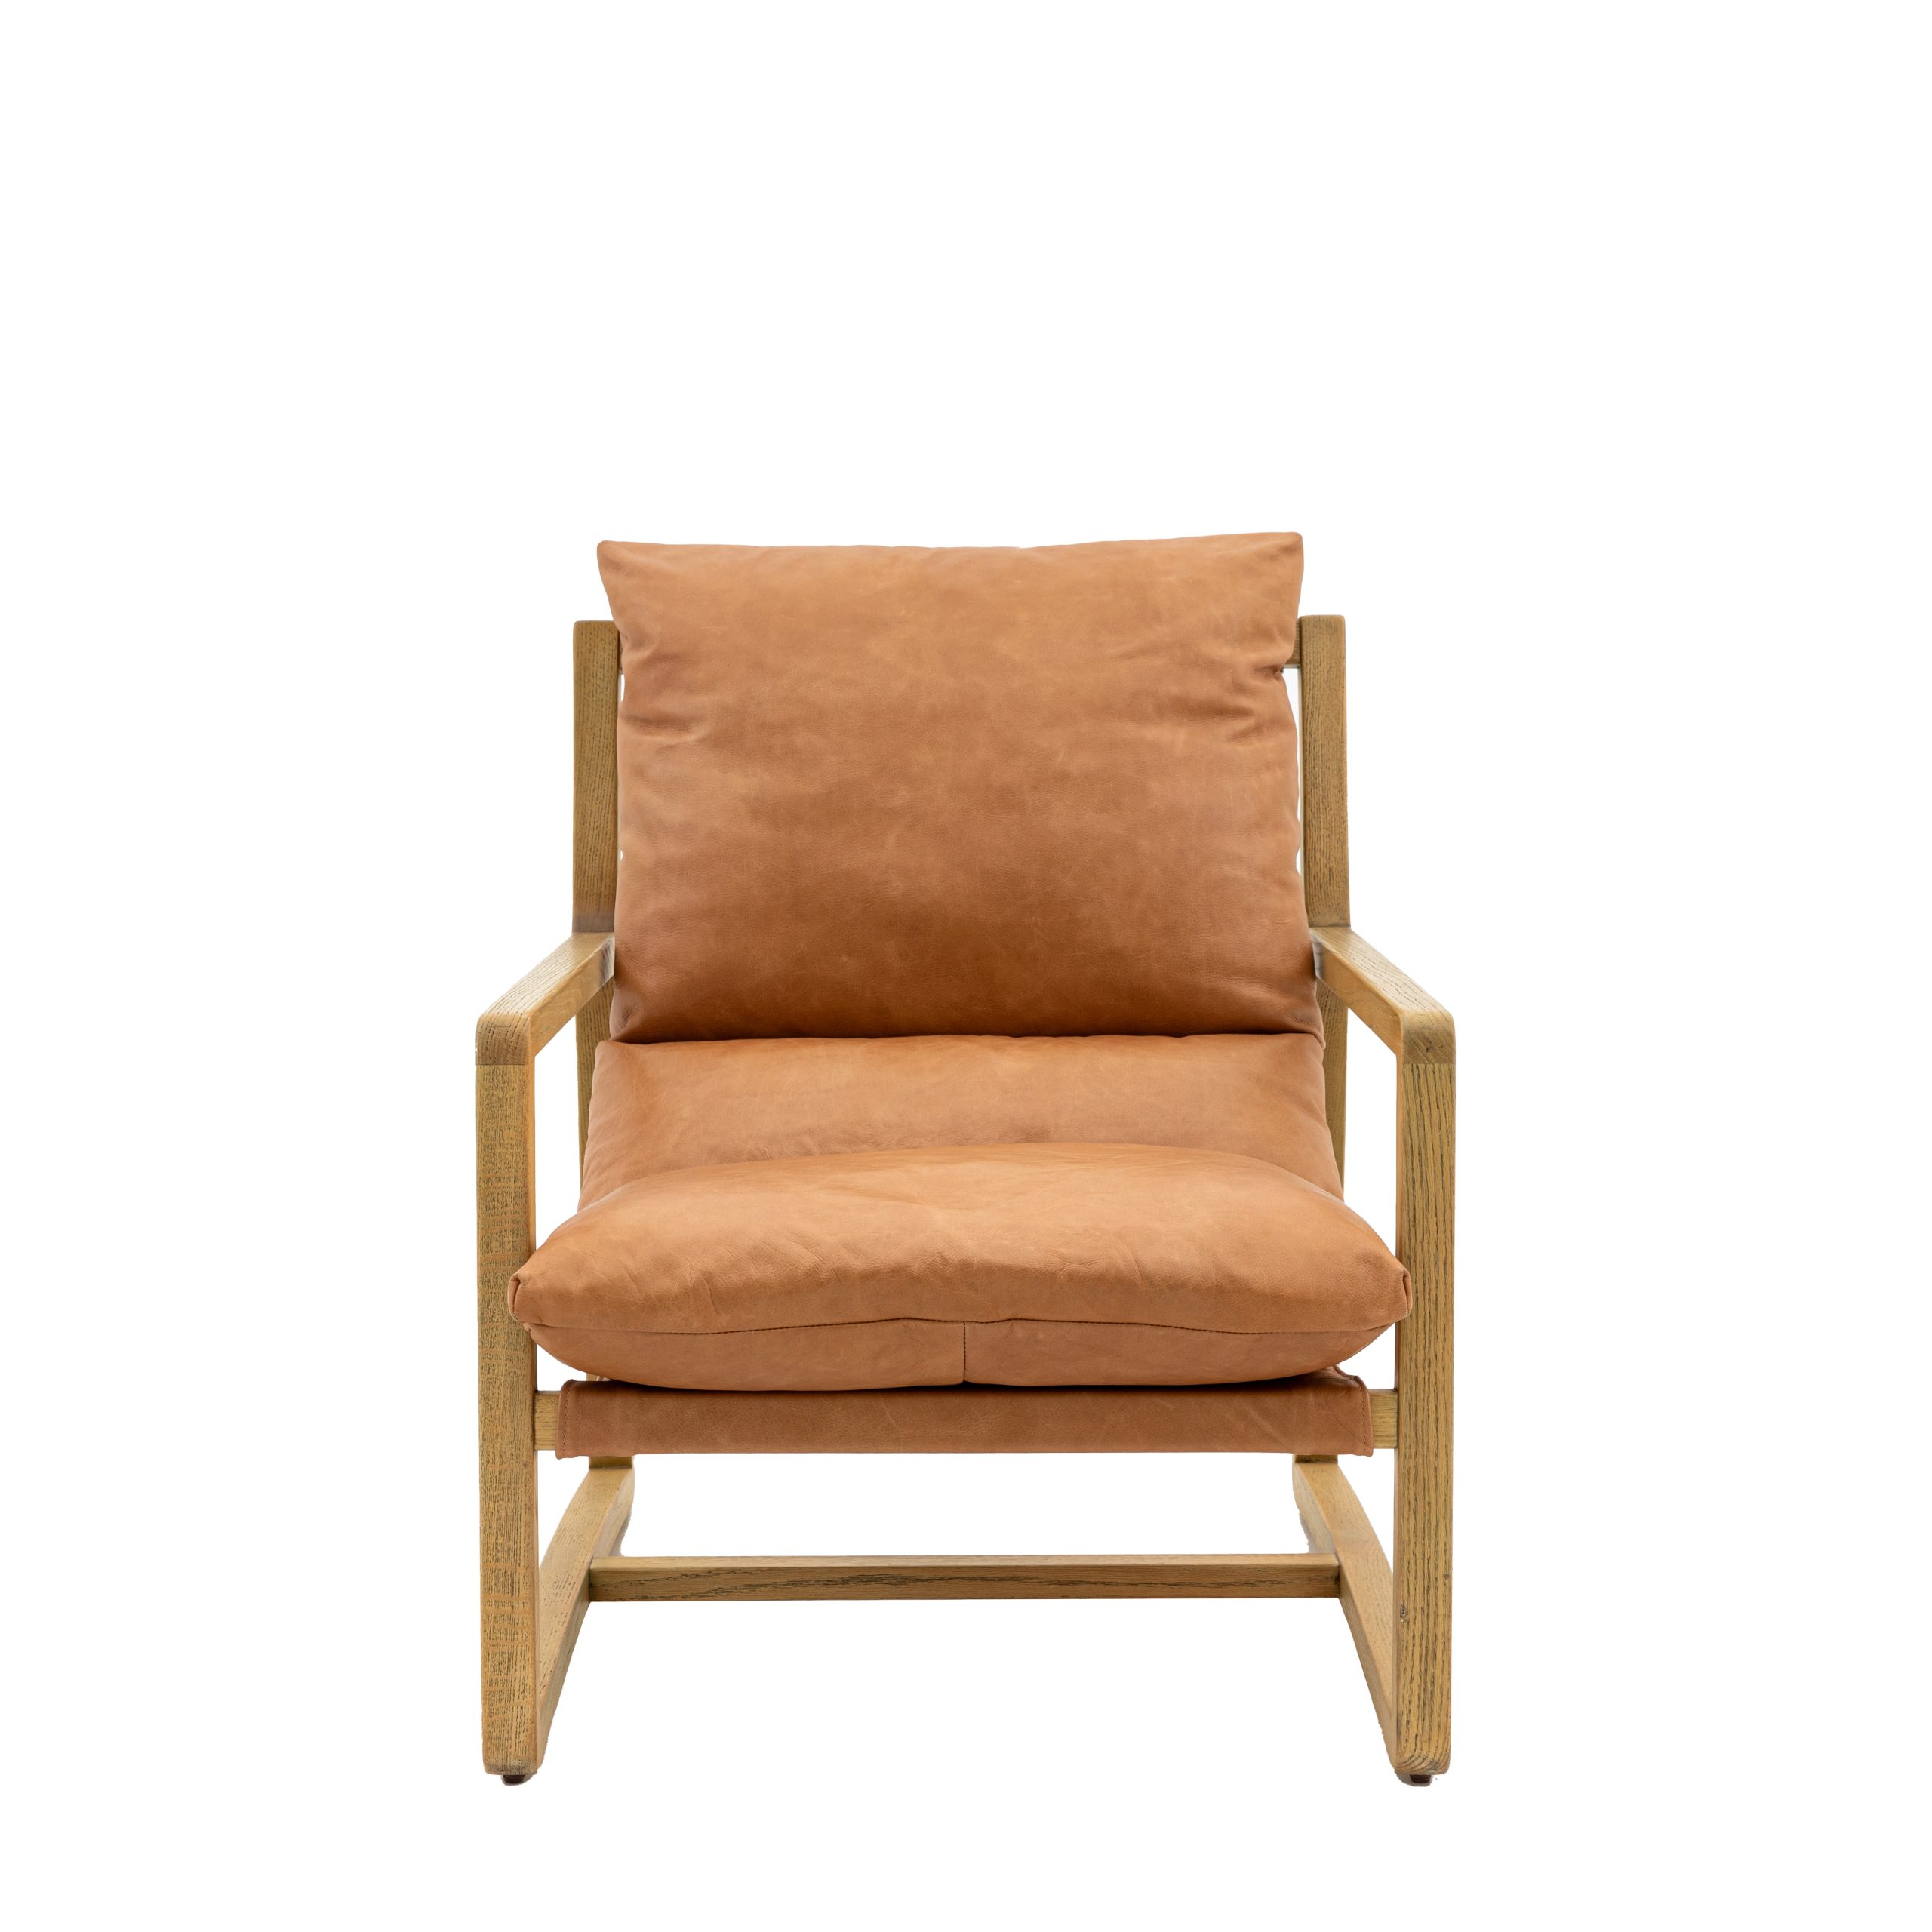 Gallery Direct Burela Lounge Chair Vint Brn Leather | Shackletons